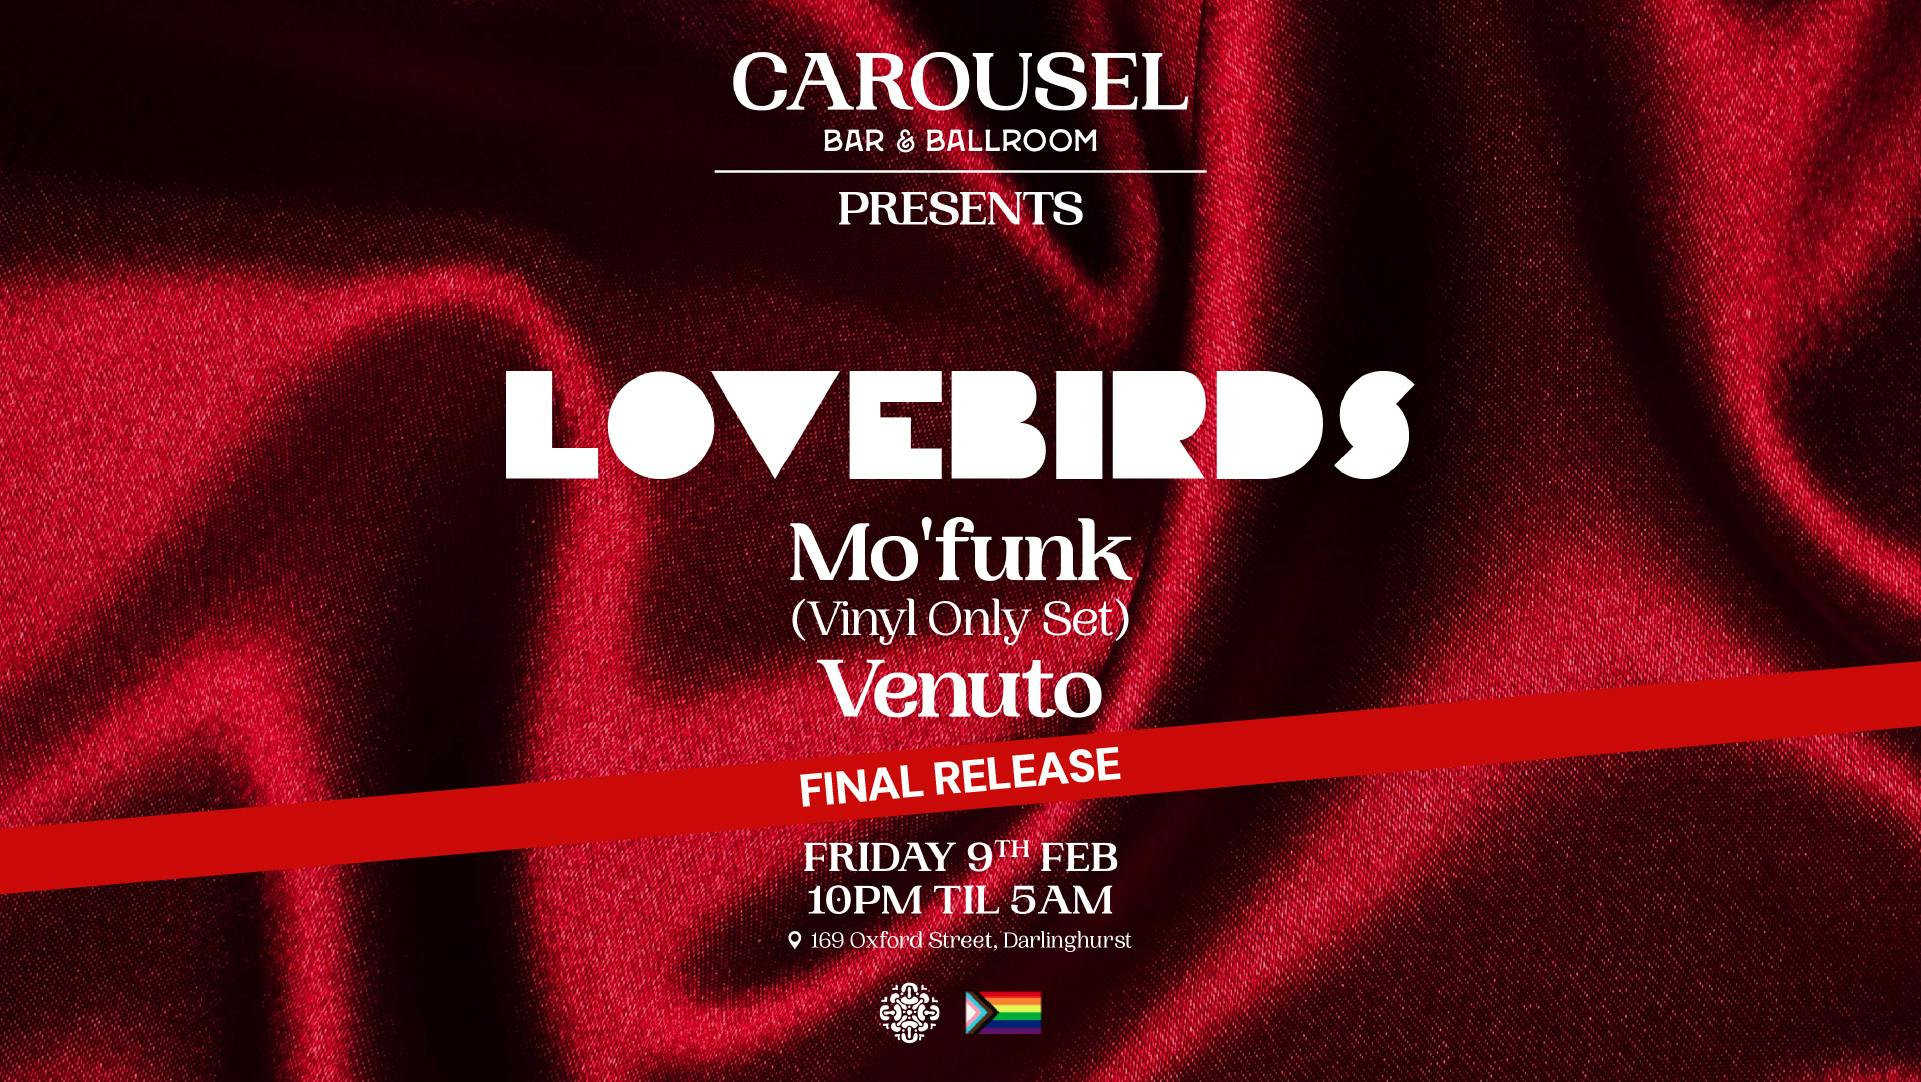 Carousel Presents Lovebirds - Friday 9th February